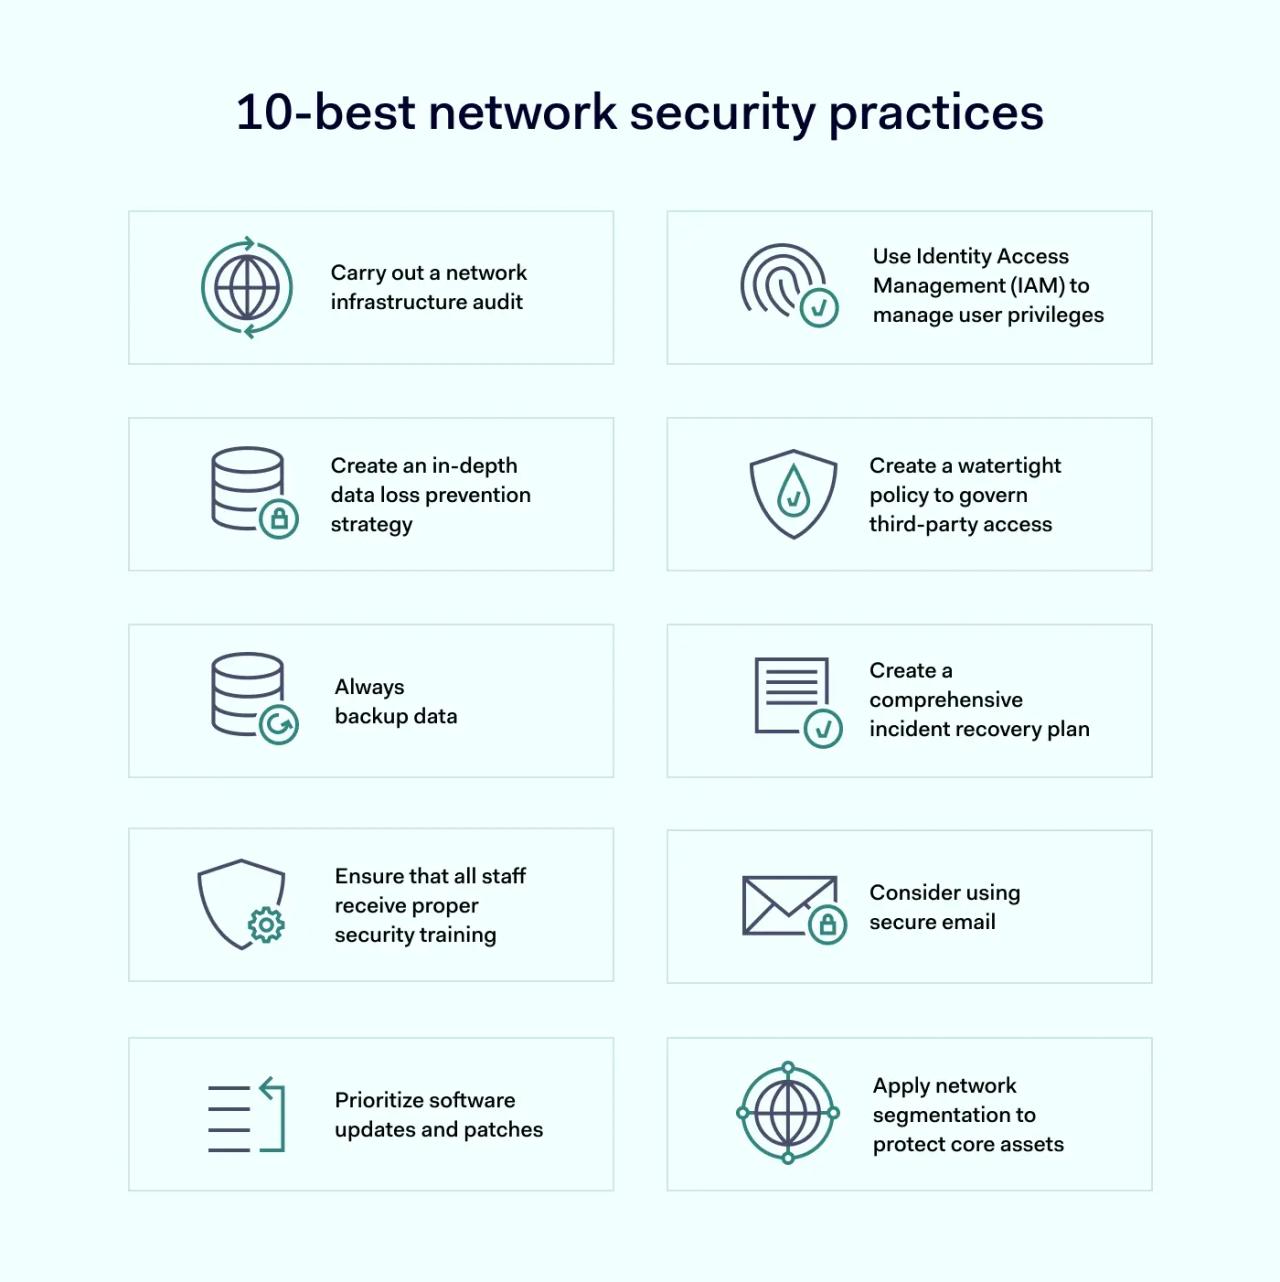 10 Network Security best practices